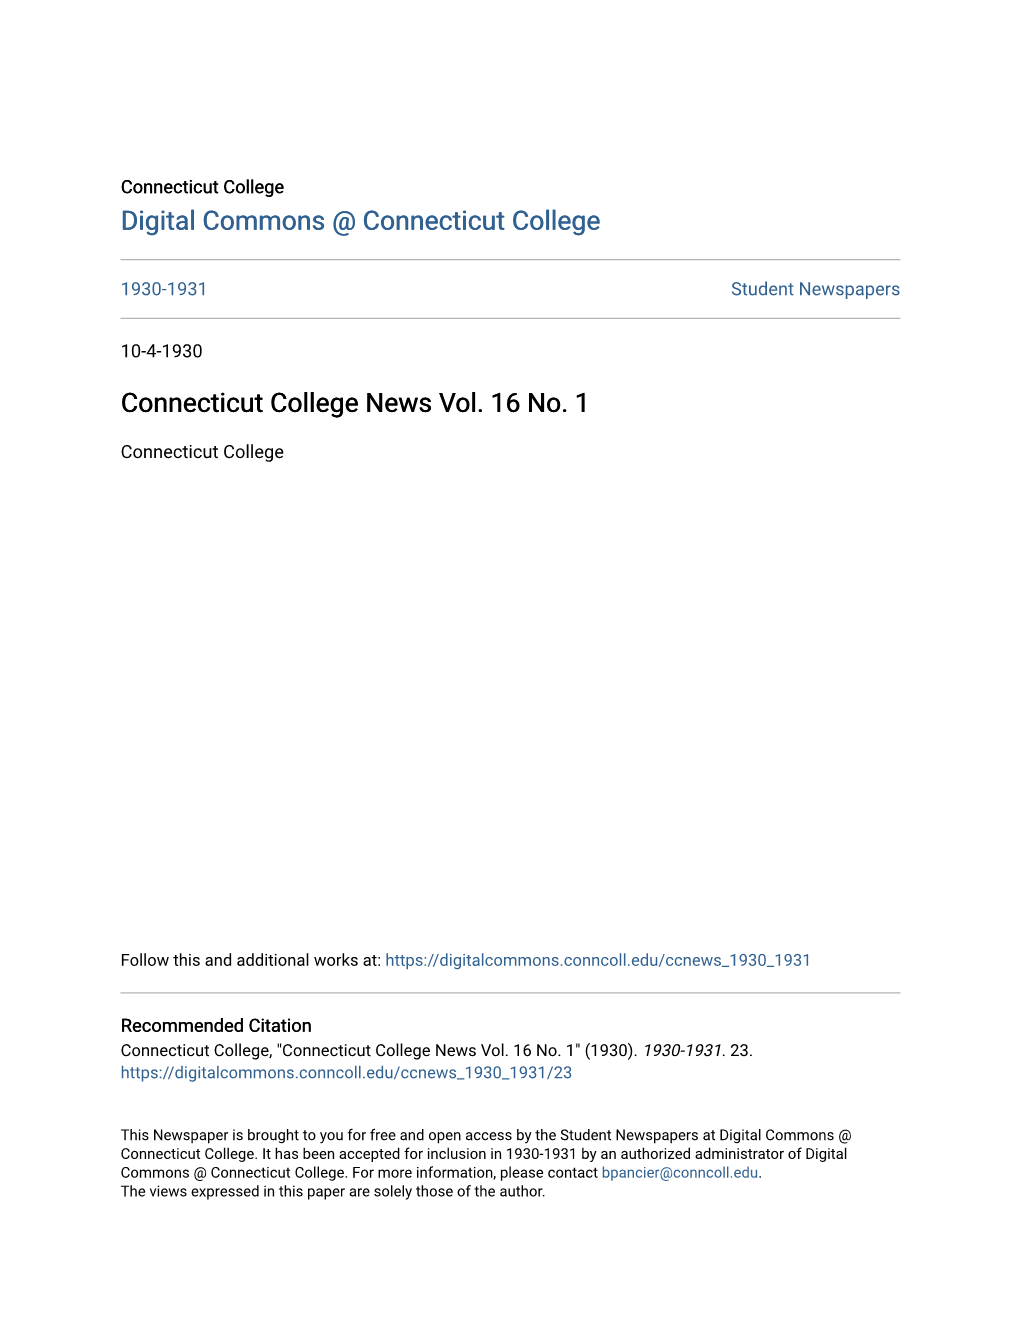 Connecticut College News Vol. 16 No. 1